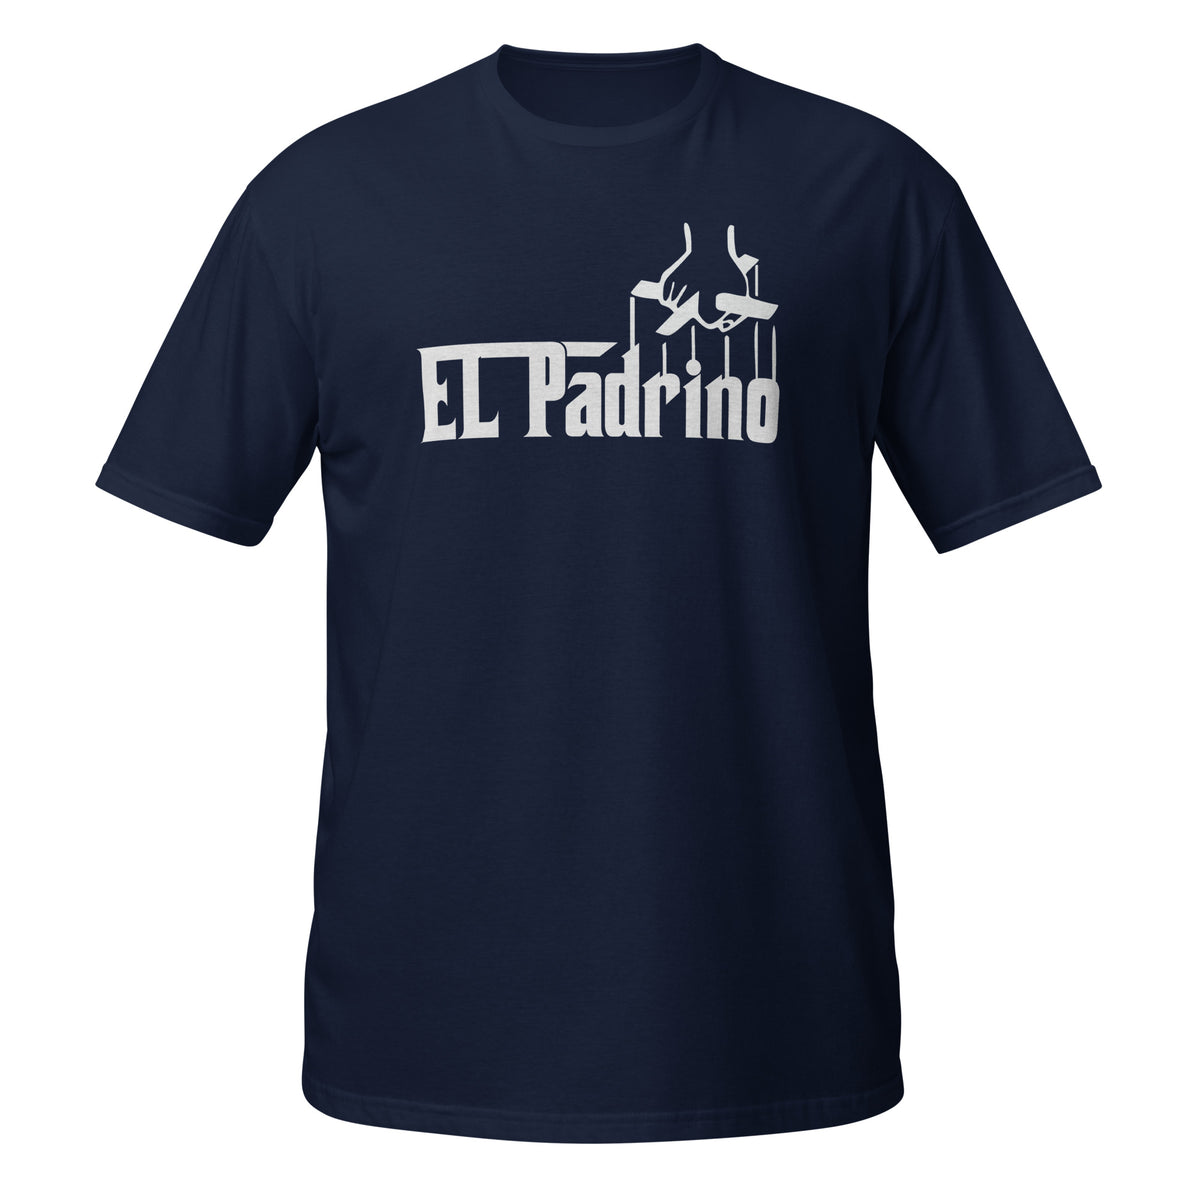 El Padrino T-Shirt (The Godfather)